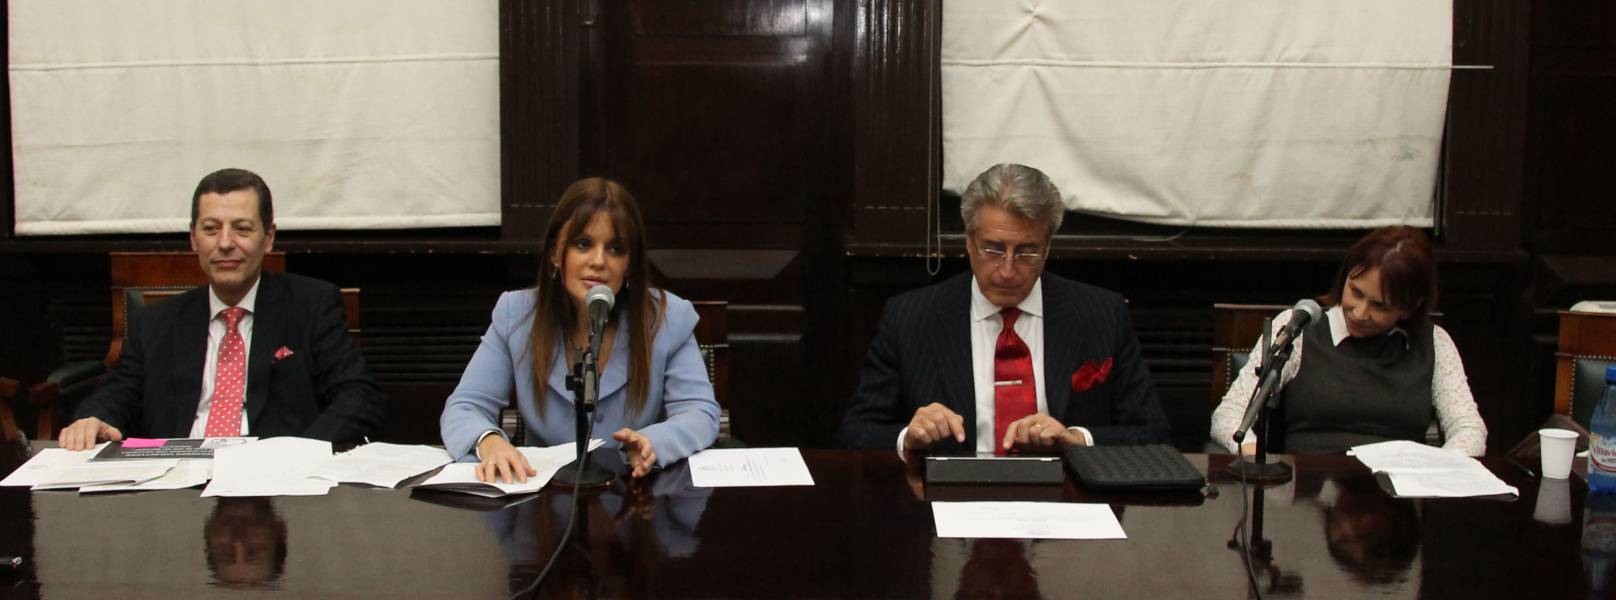 Héctor O. Chomer, Julia Villanueva, Daniel R. Vítolo y Fernanda Gómez